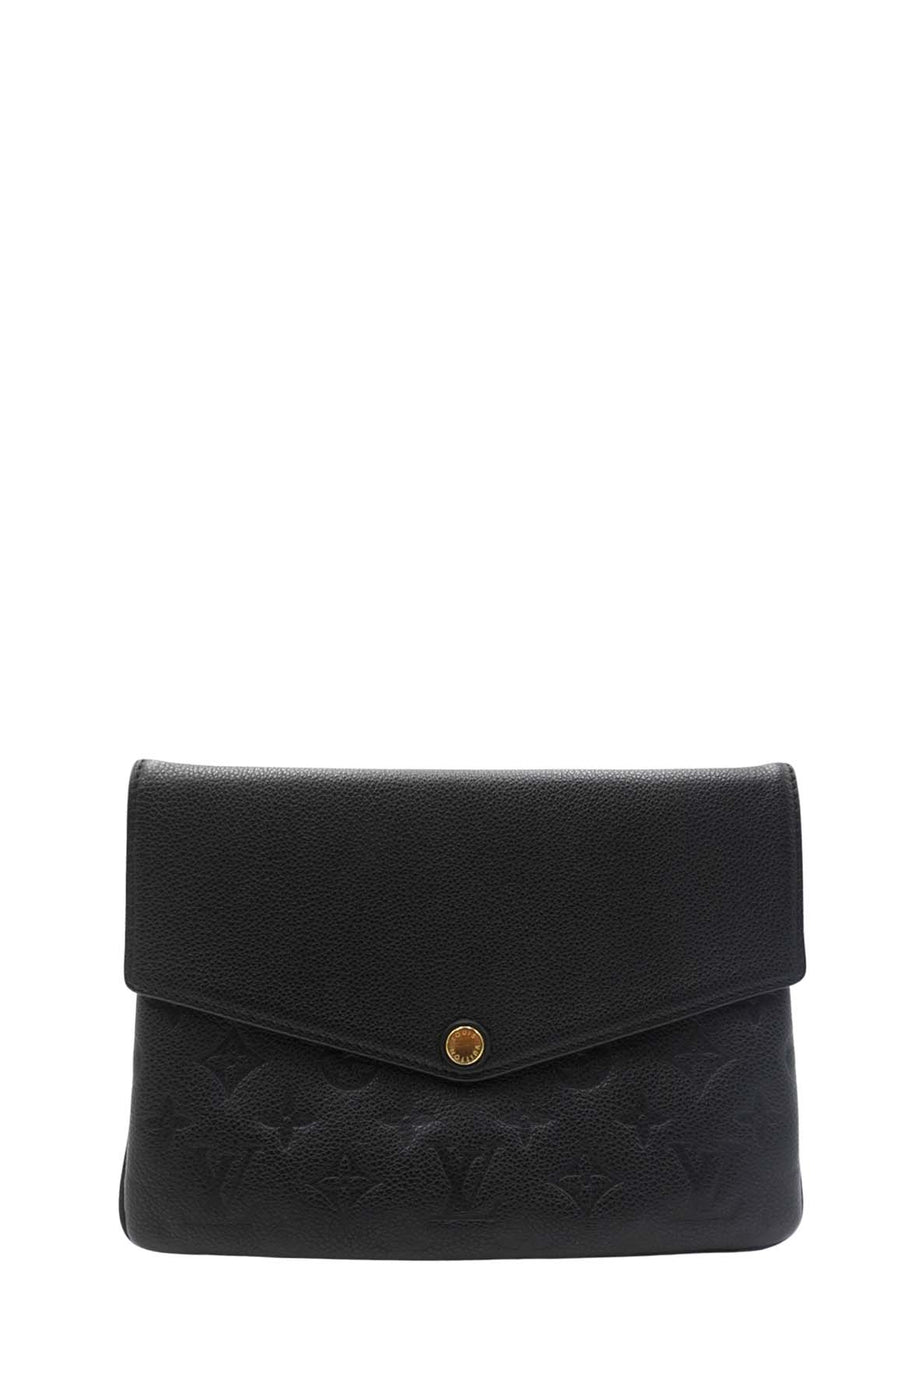 Louis Vuitton Monogram Empreinte Leather Black Noir Twice/Twinset